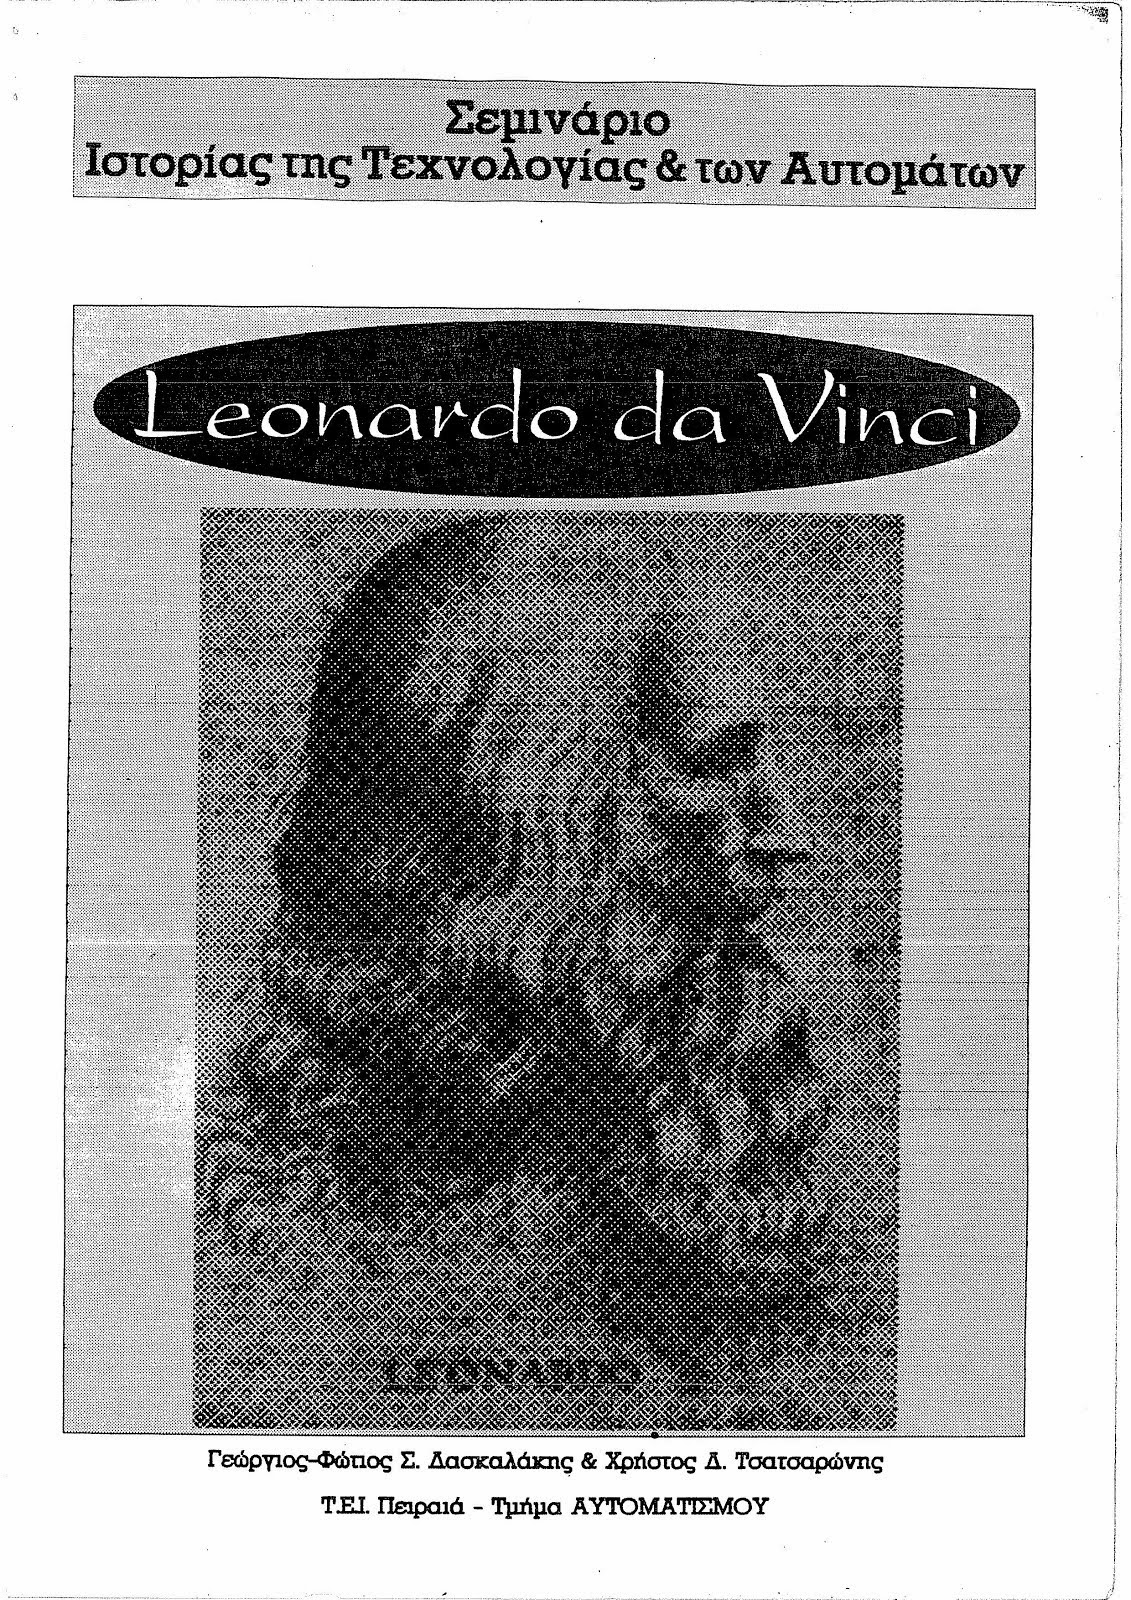 Leonardo Da Vinci - Γεώργιος Φώτιος Σ. Δασκαλάκης, Χρήστος Δ. Τσατσαρώνης